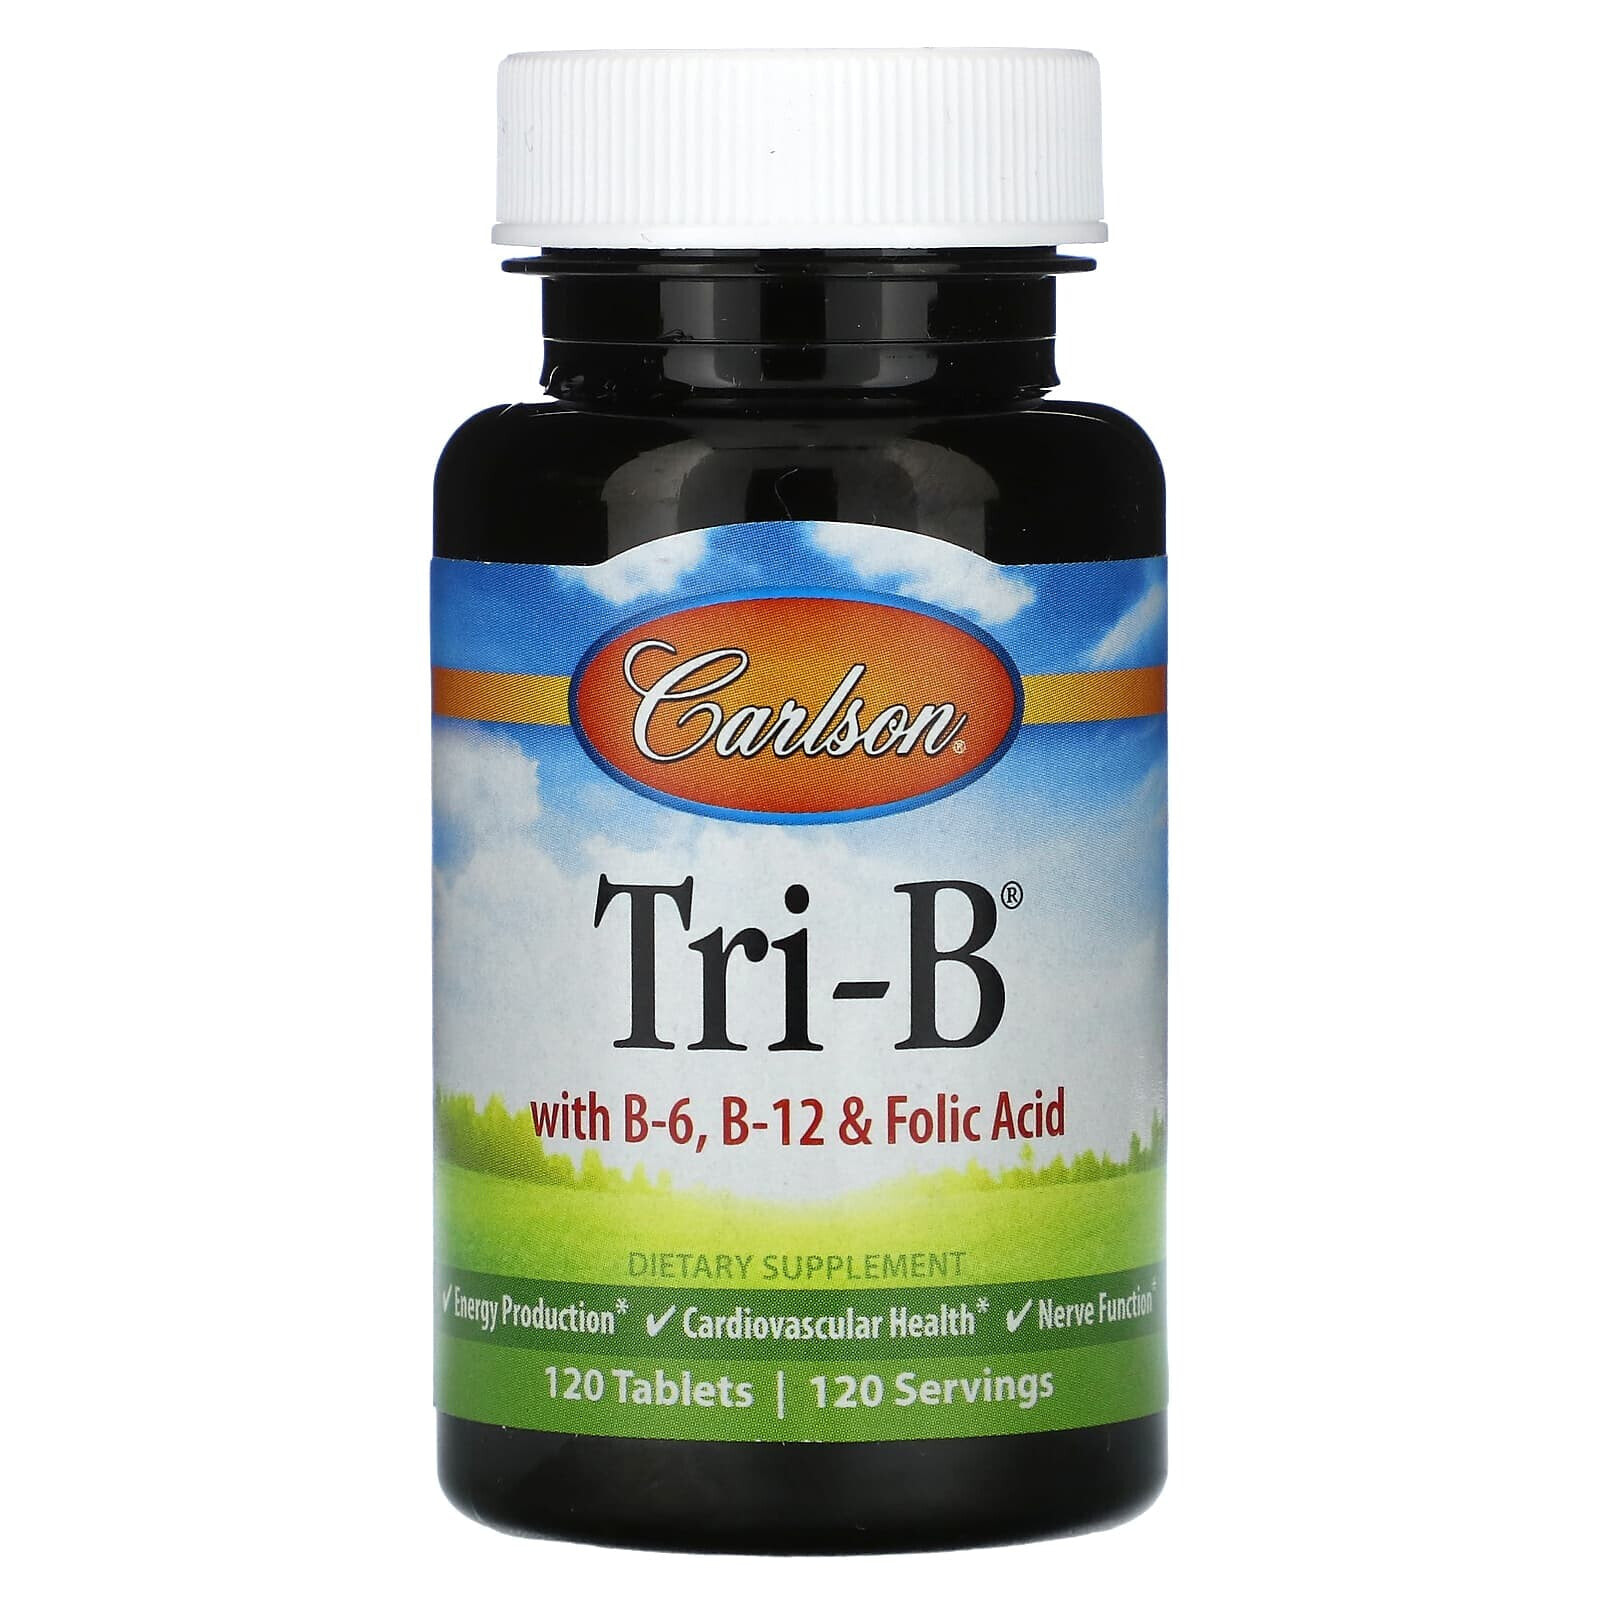 Carlson, Tri-B with B-6, B-12 & Folic Acid, 120 Tablets